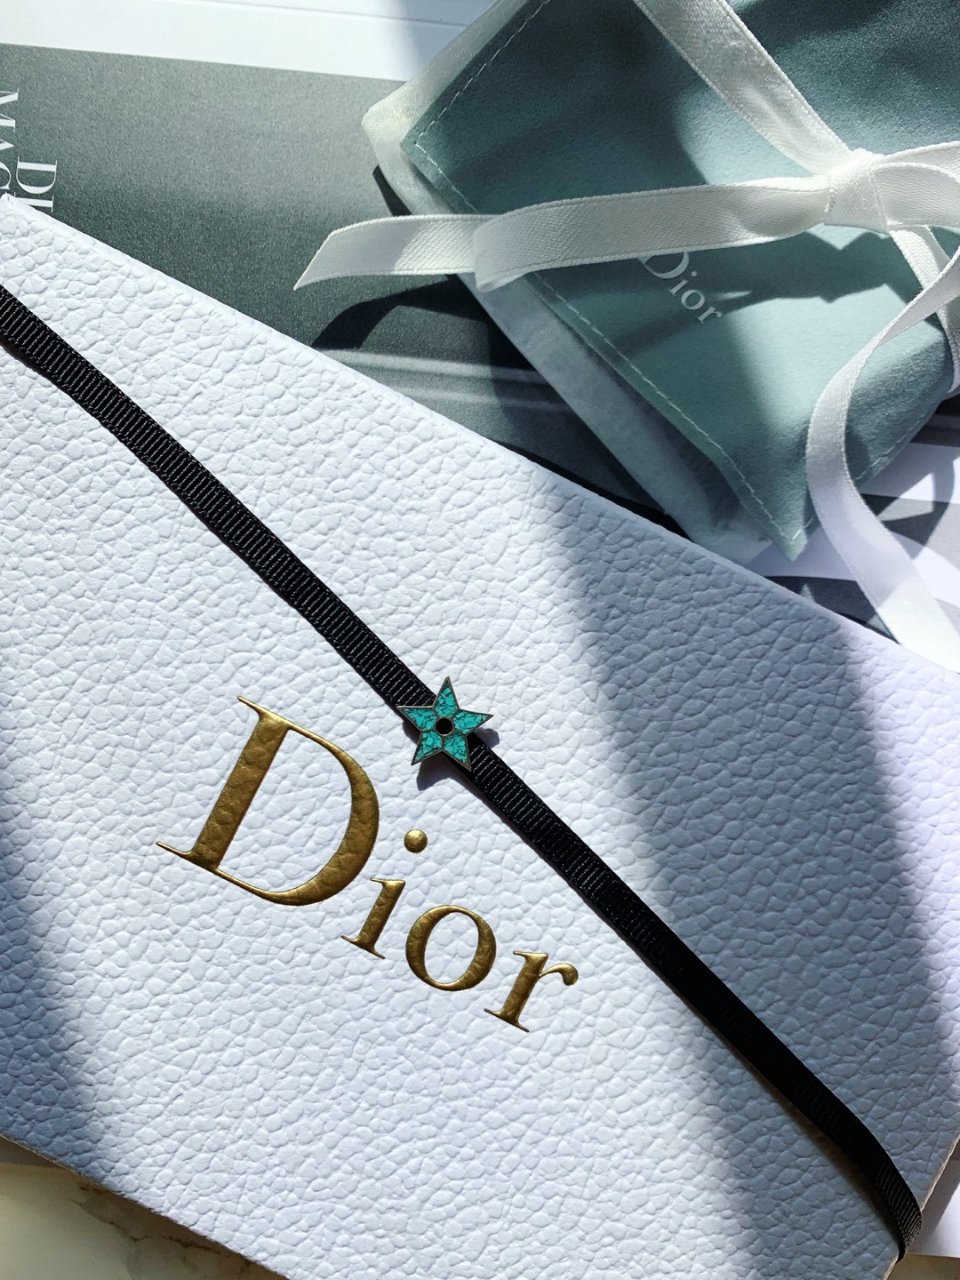 Dior Choker⭐️